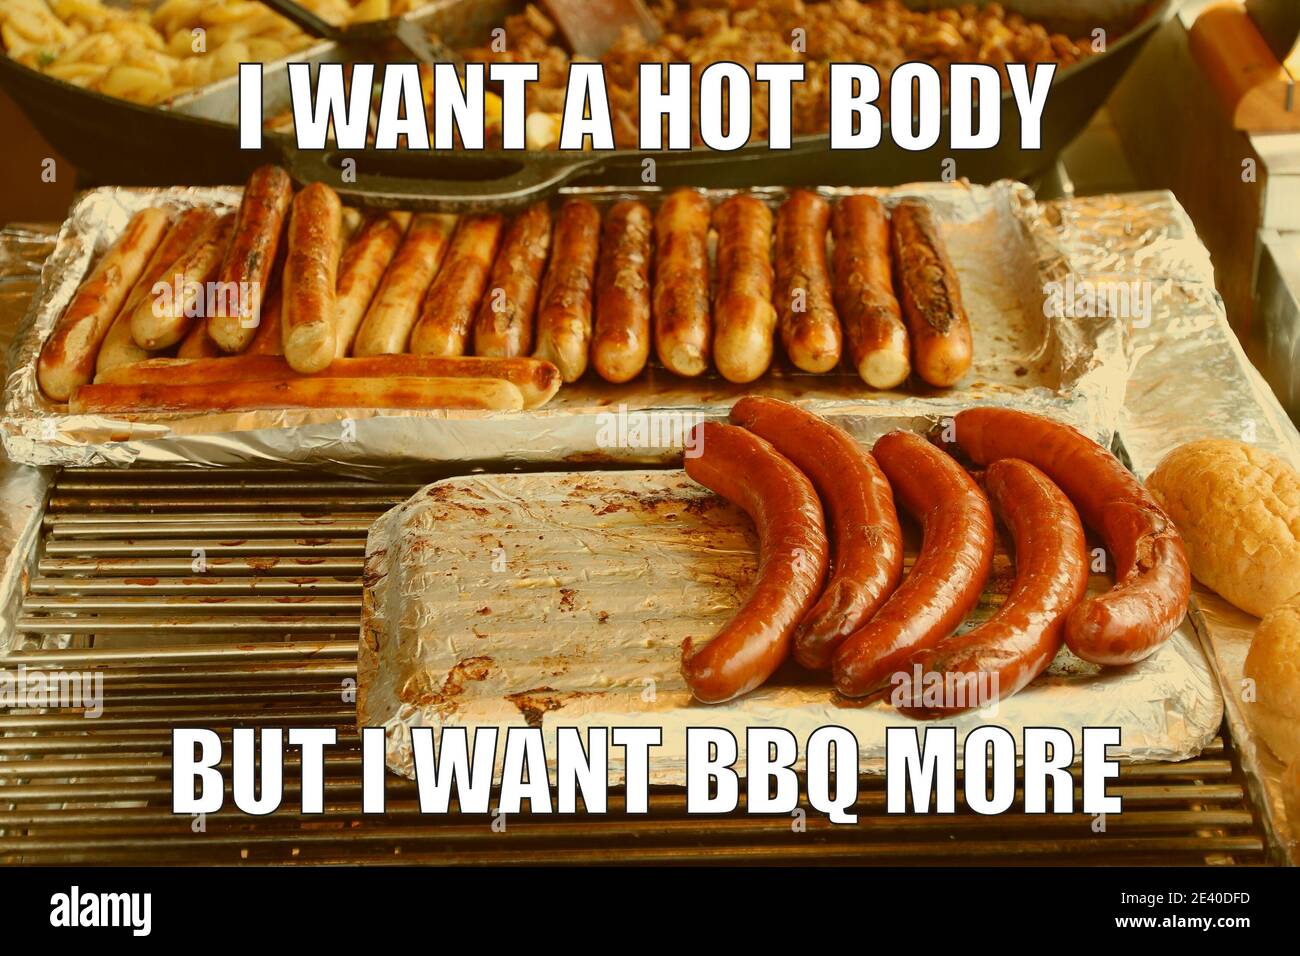 Carne eater caliente cuerpo divertido meme para compartir en las redes sociales. Chiste de barbacoa. Foto de stock